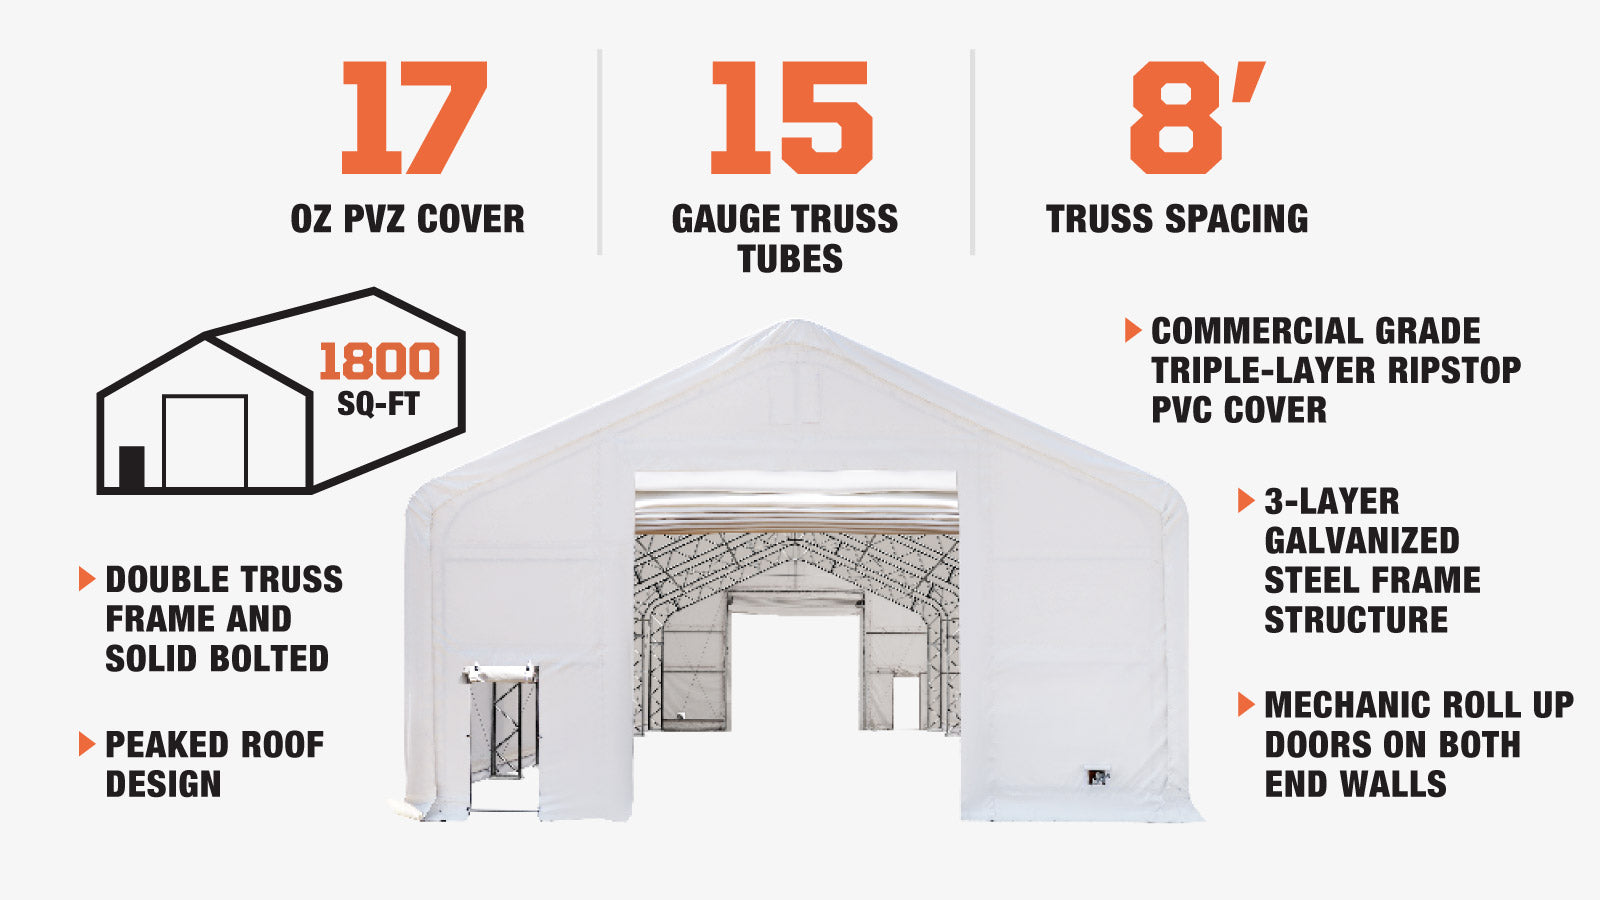 TMG Industrial 30' x 60' Dual Truss Storage Shelter with Heavy Duty 17 oz PVC Cover & Drive Through Doors, TMG-DT3061-description-image